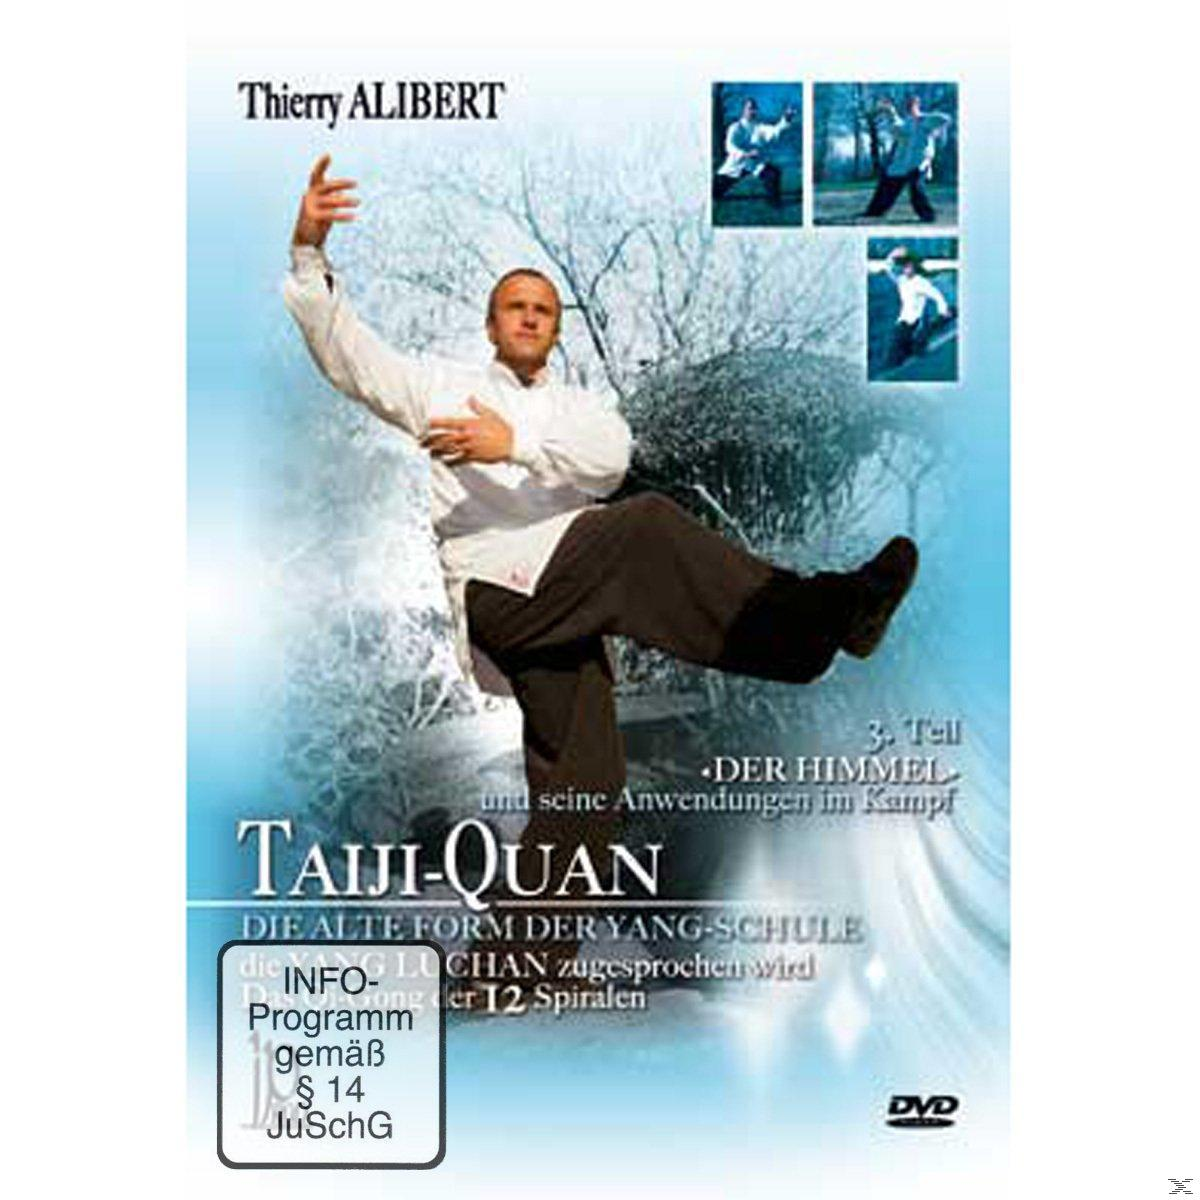 alte - Taiji-Quan Form 3 Yang-Schule der DVD Die